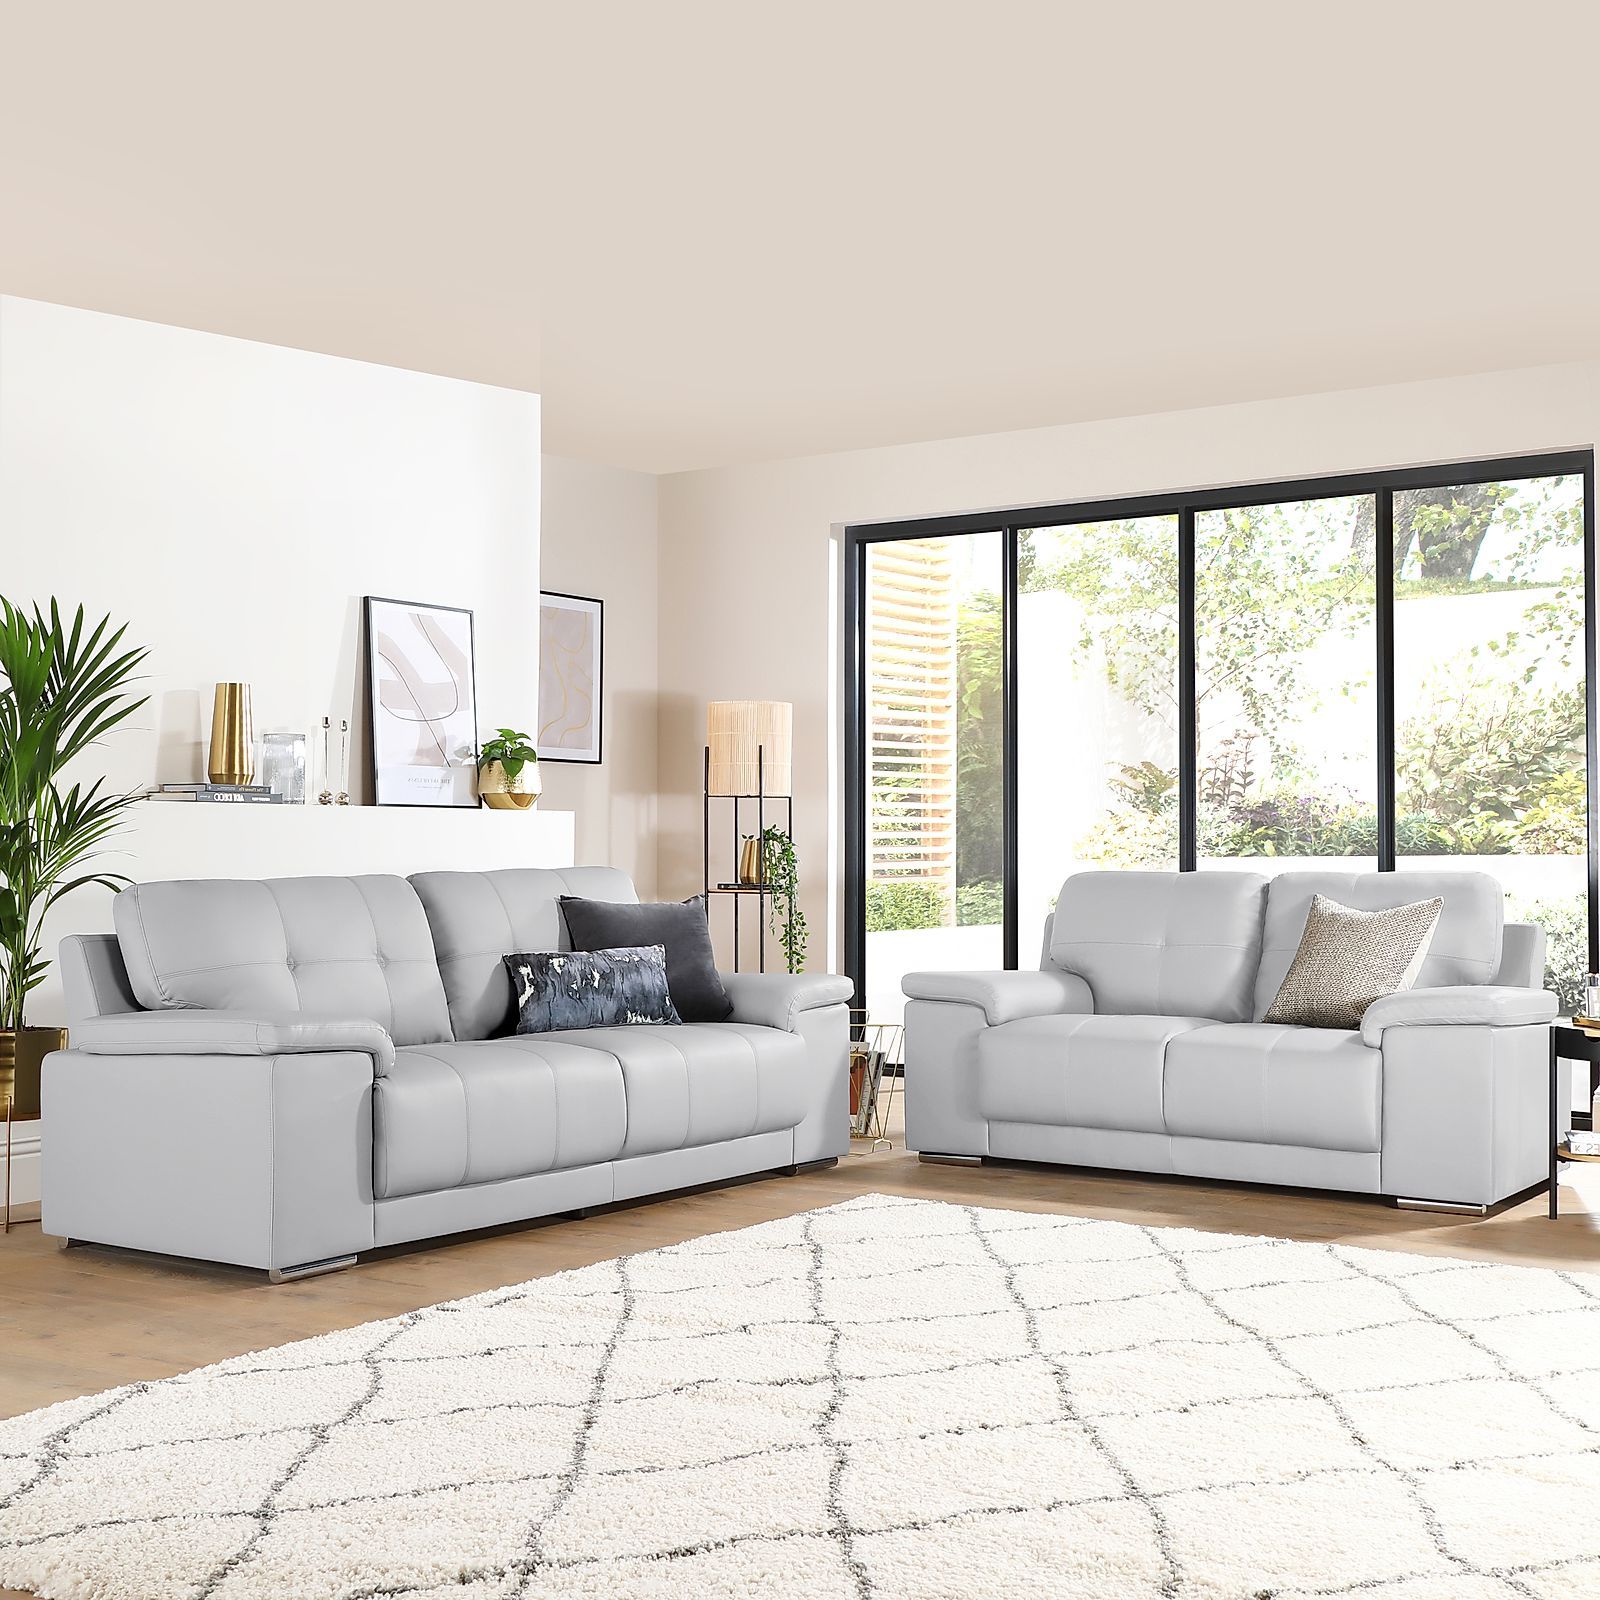 Kansas Light Grey Leather 3+2 Seater Sofa Set | Furniture Choice Inside Sofas In Light Gray (View 9 of 20)